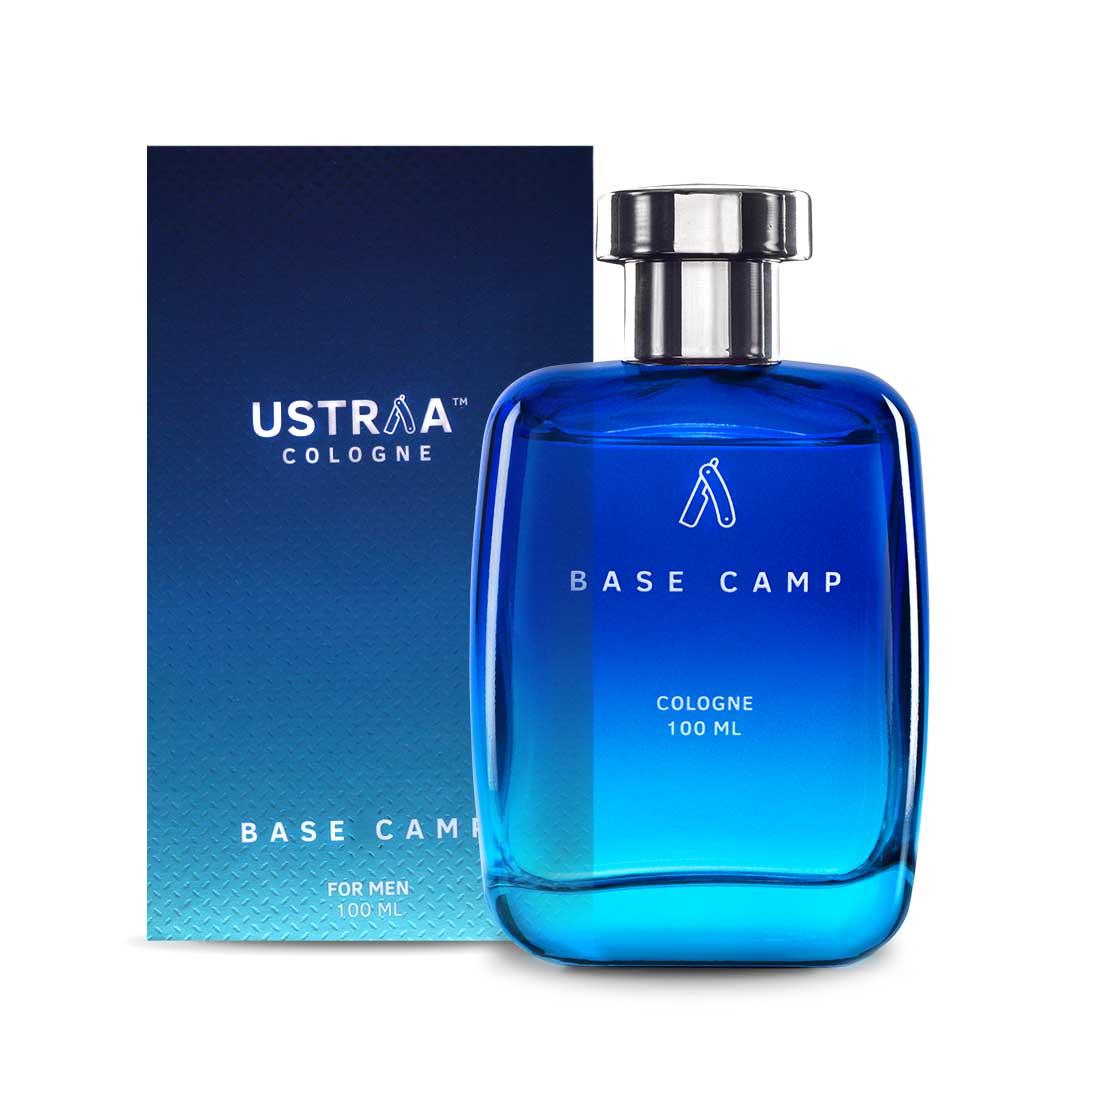 Base Camp Cologne - 100 ml - Perfume for Men